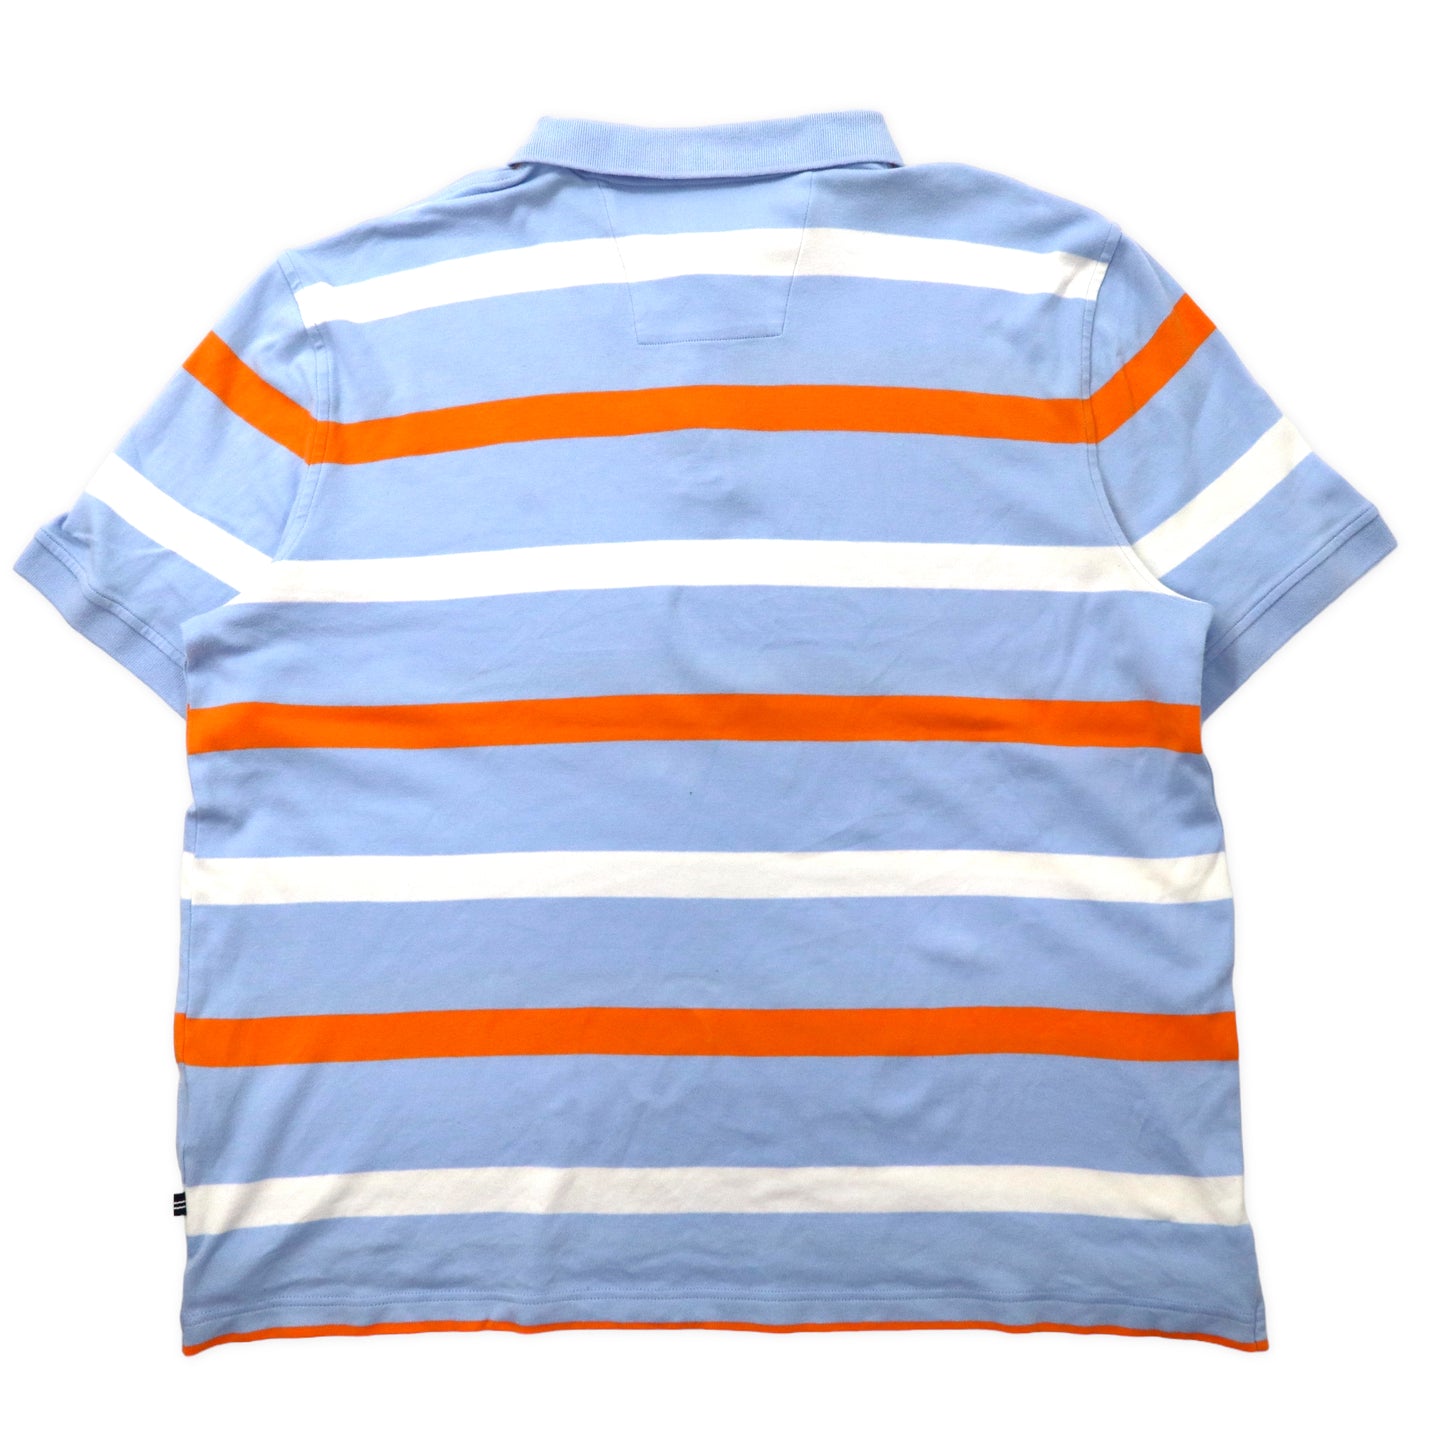 NAUTICA ボーダー ポロシャツ XXL ブルー コットン ワンポイントロゴ ビッグサイズ